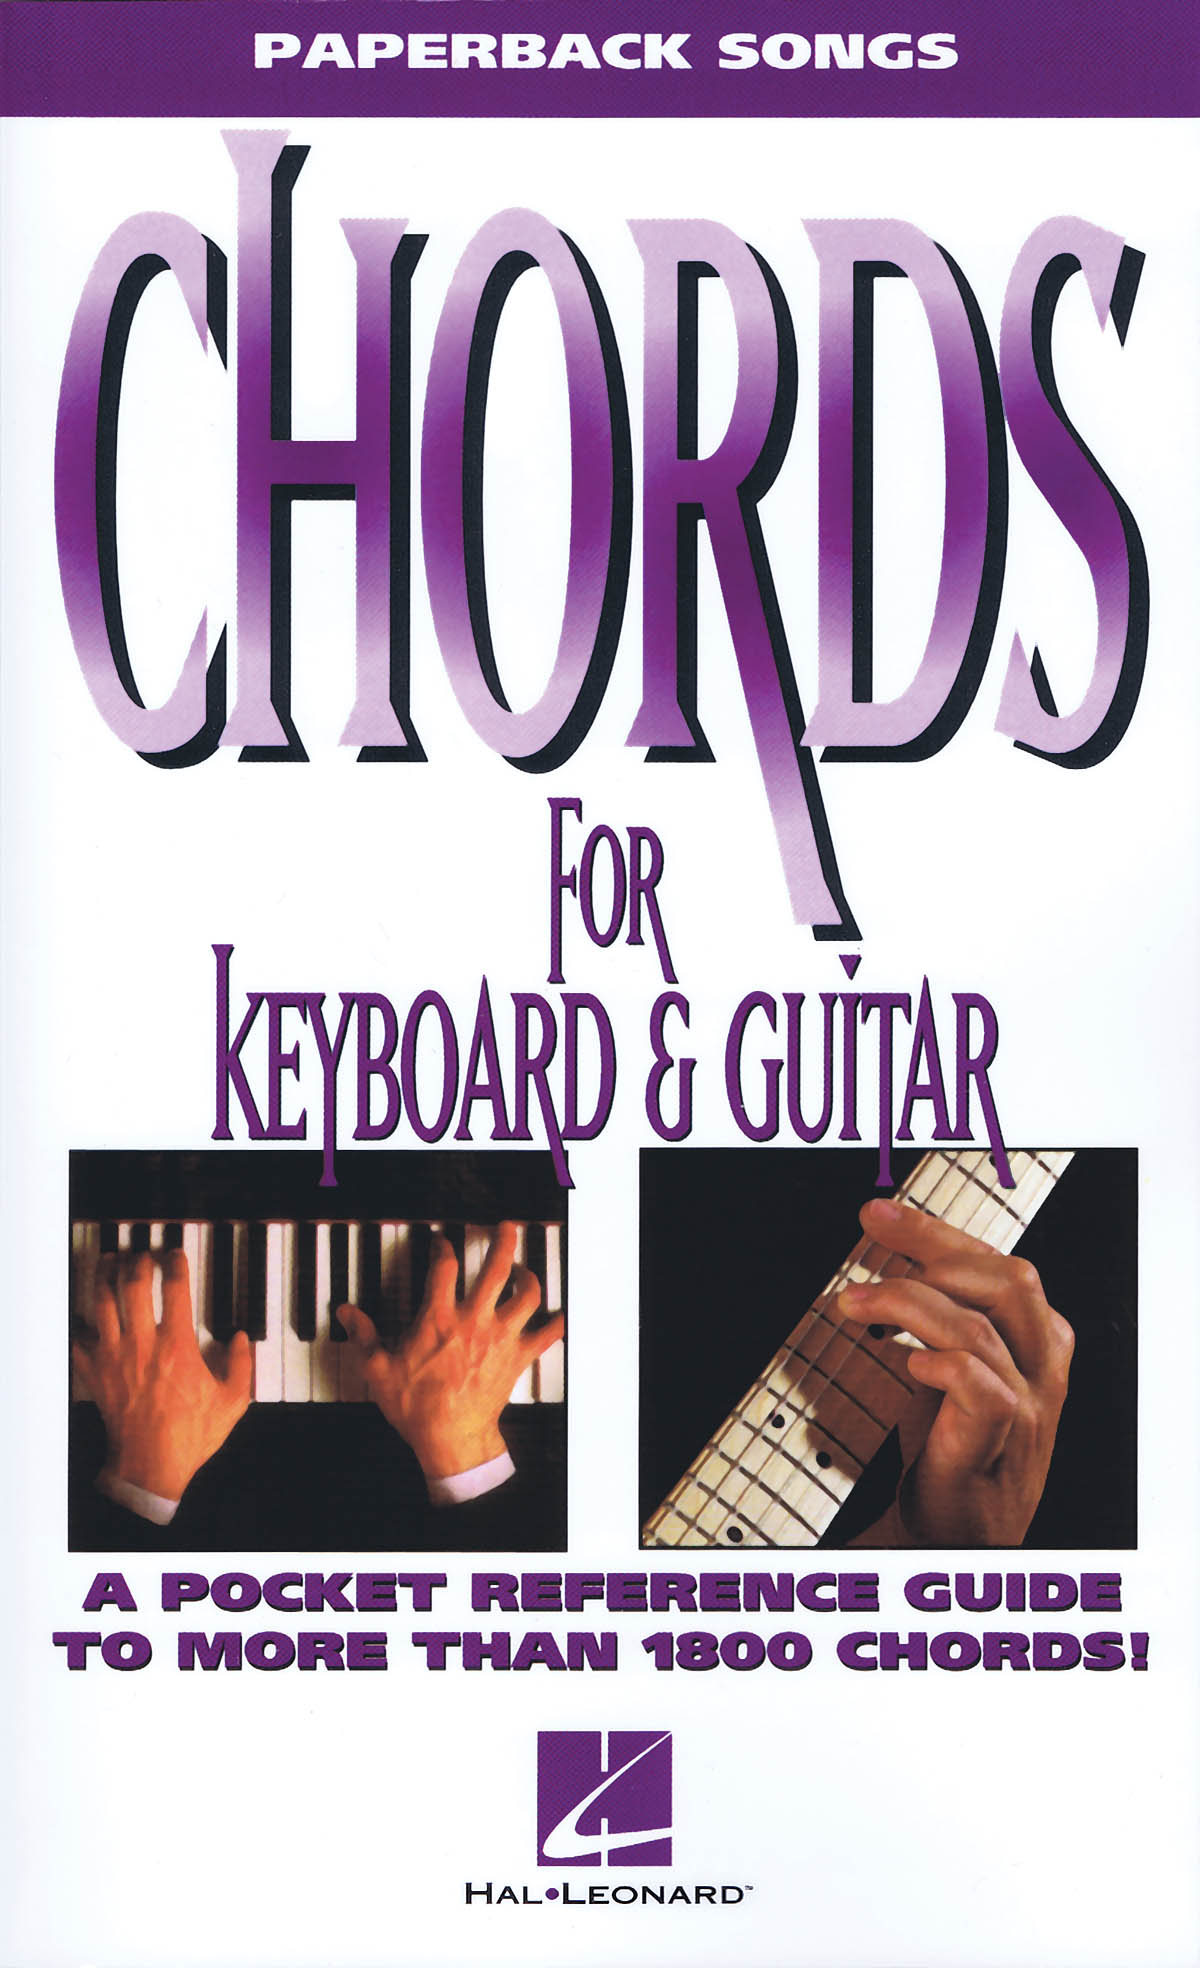 Chords fuer Keyboard & Guitar